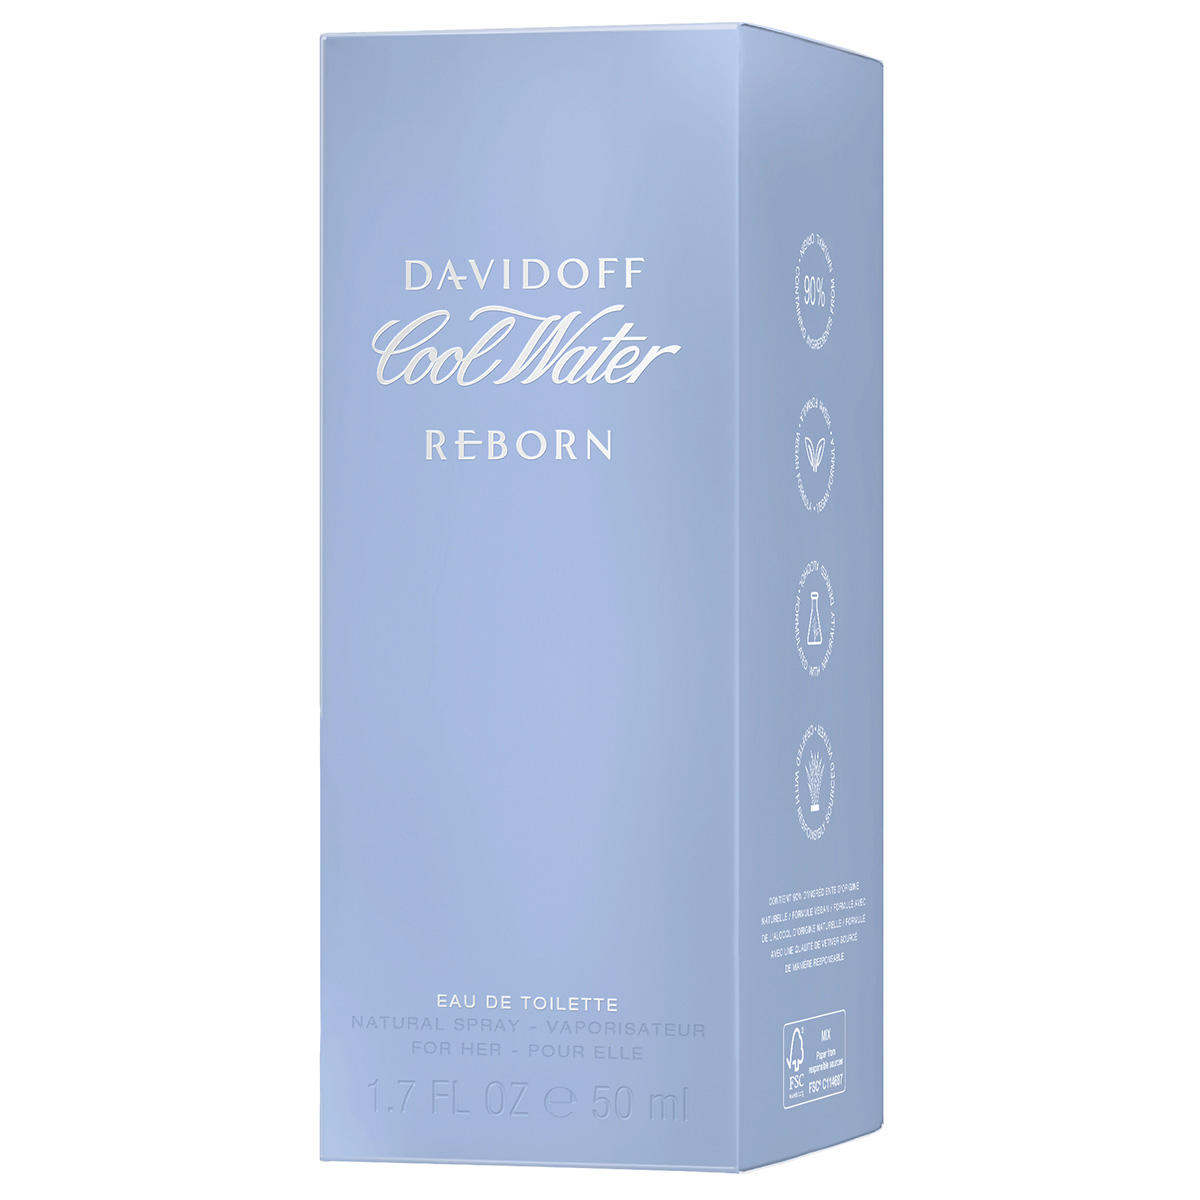 DAVIDOFF Cool Water Woman Reborn Eau de Toilette 50 ml - 3